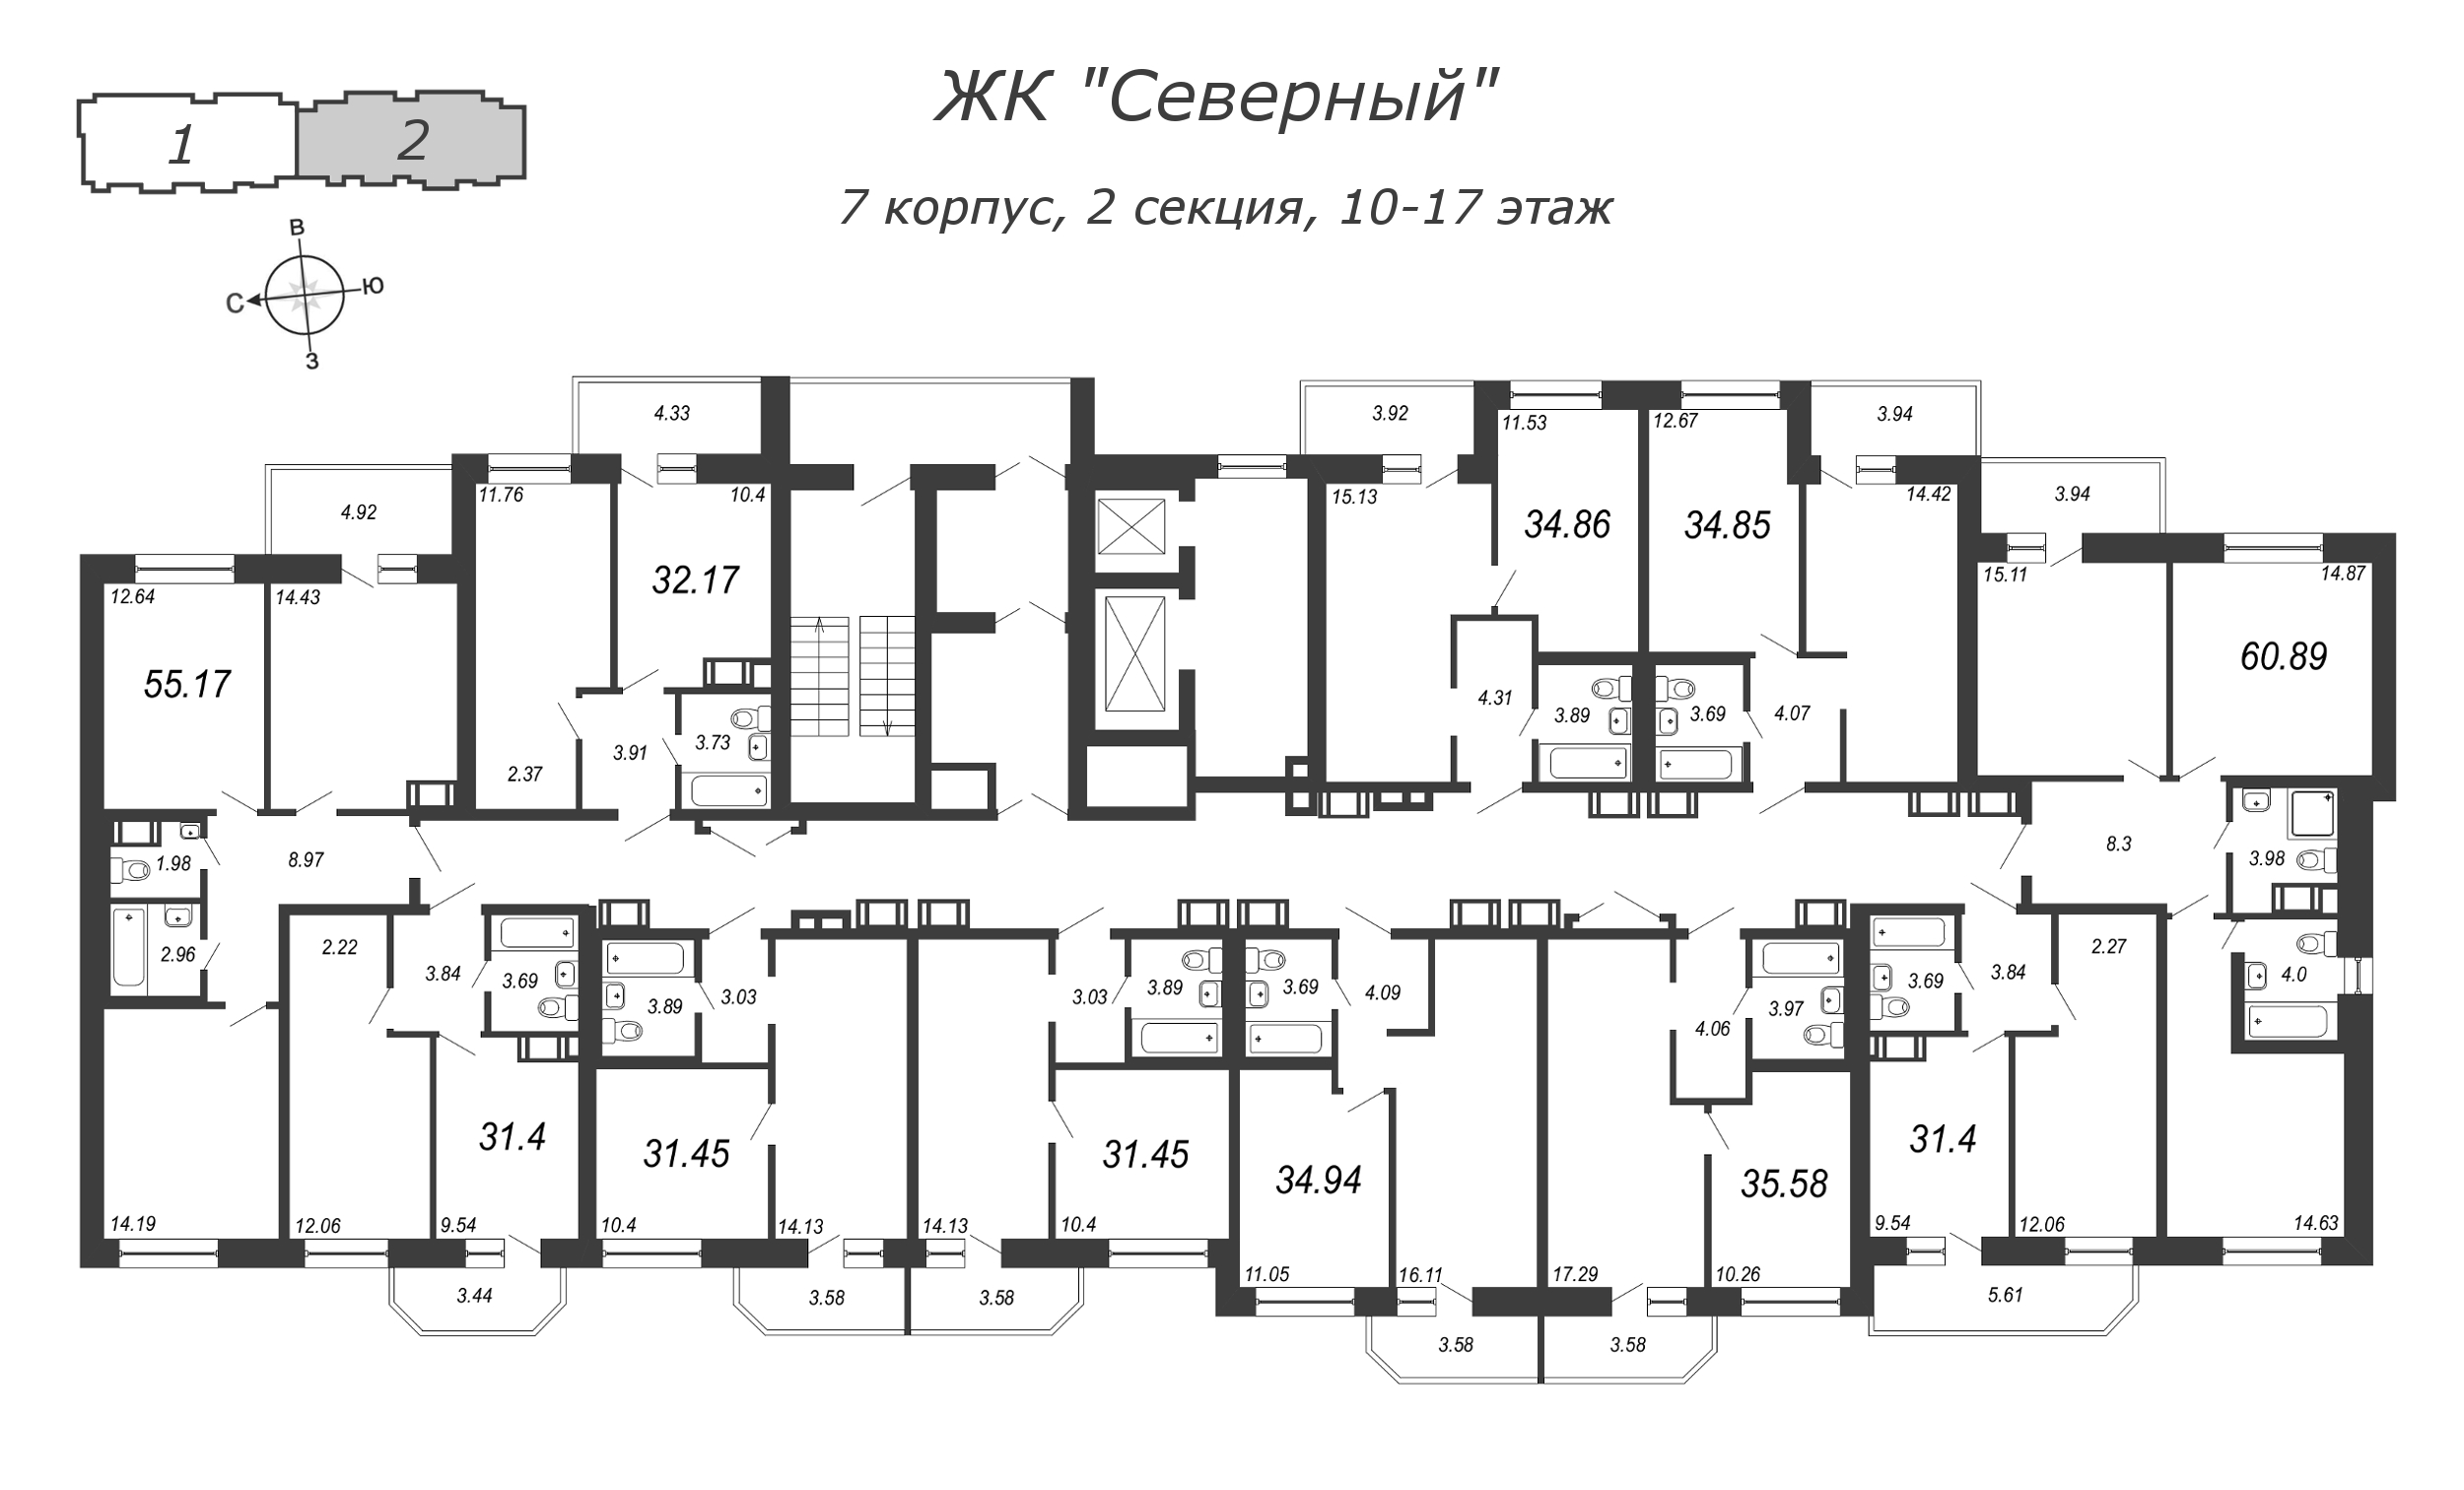 3-комнатная (Евро) квартира, 60.89 м² - планировка этажа